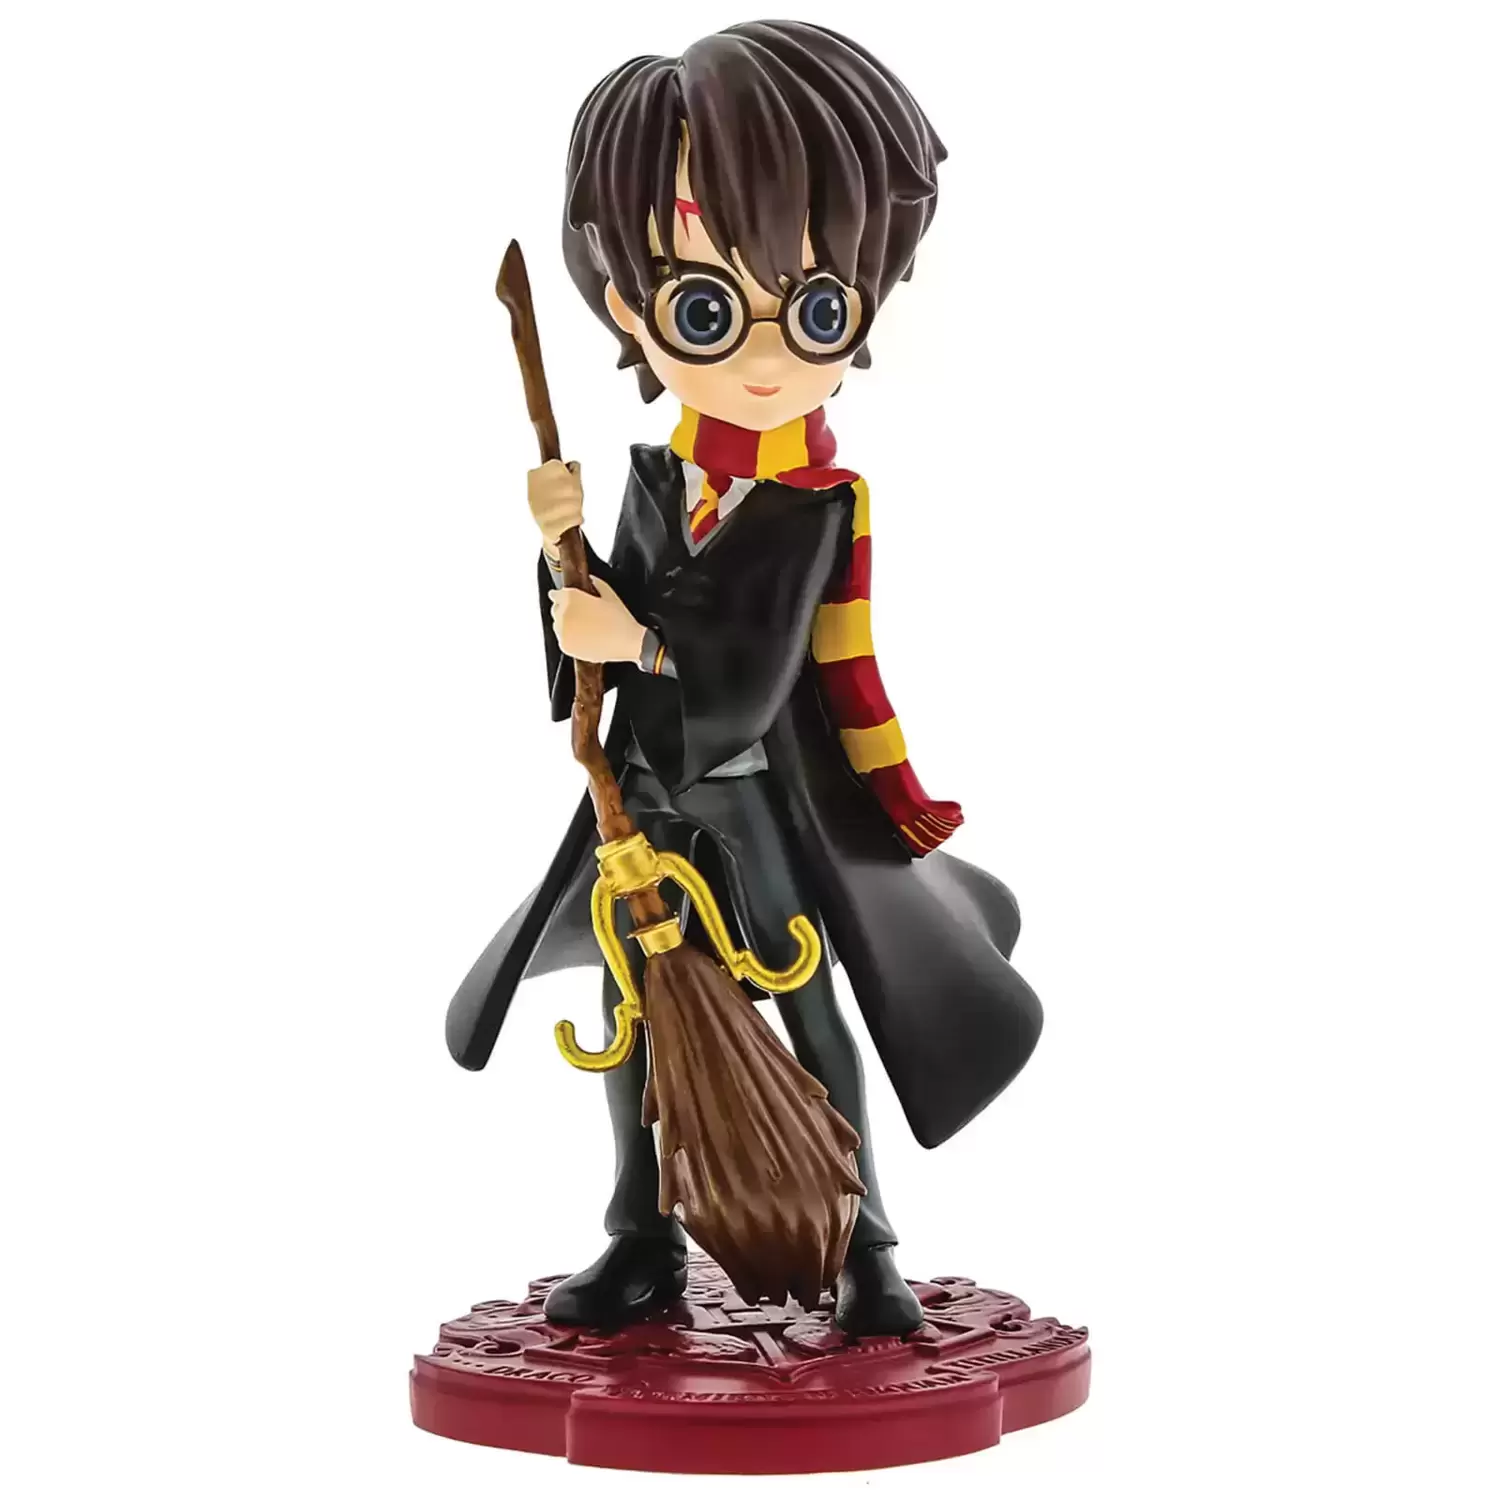 Wizarding World of Harry Potter (Enesco) - Harry Potter Figurine